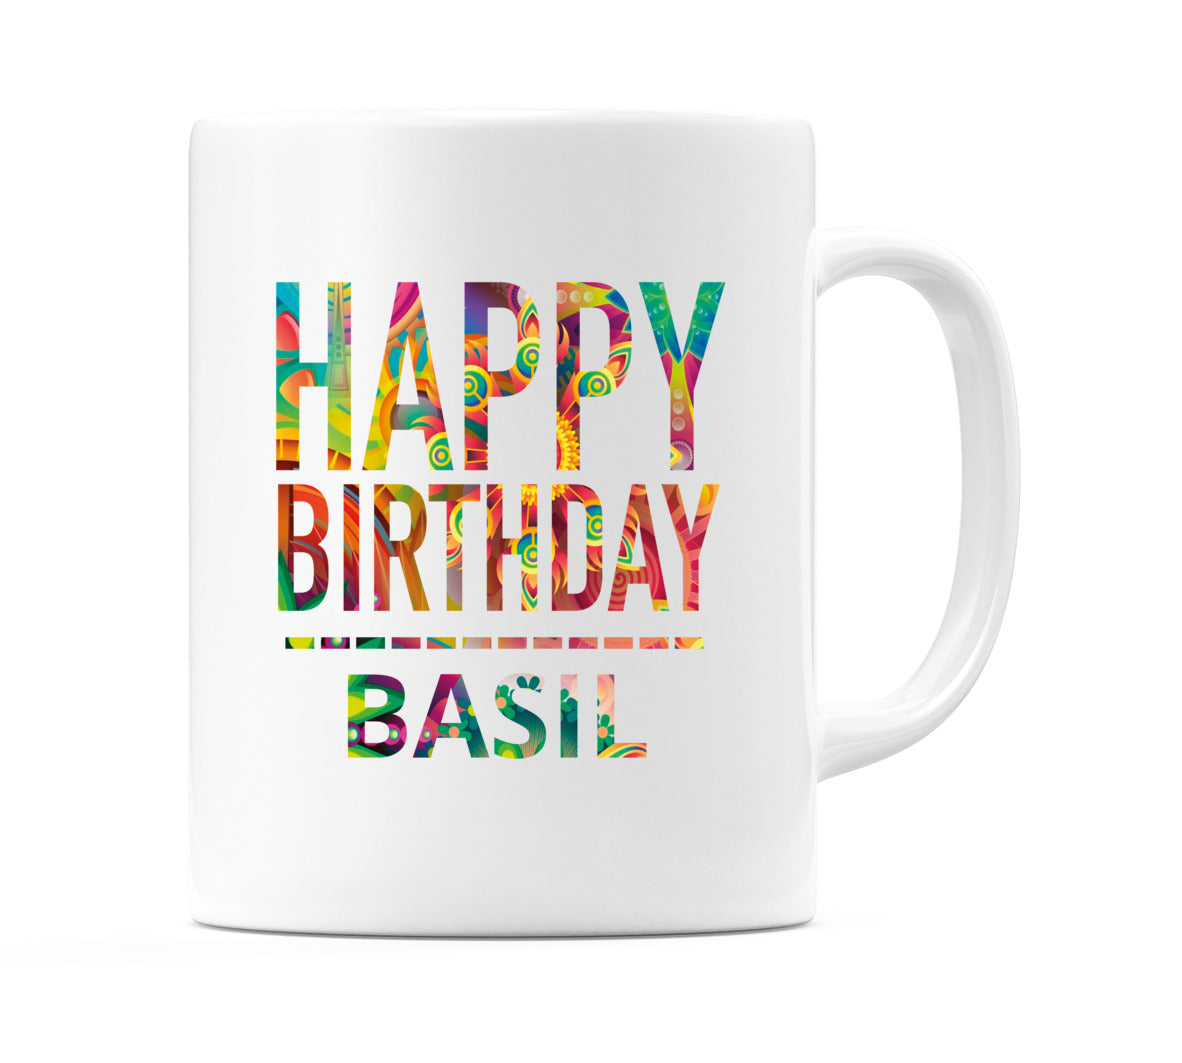 Happy Birthday Basil (Tie Dye Effect) Mug Cup by WeDoMugs